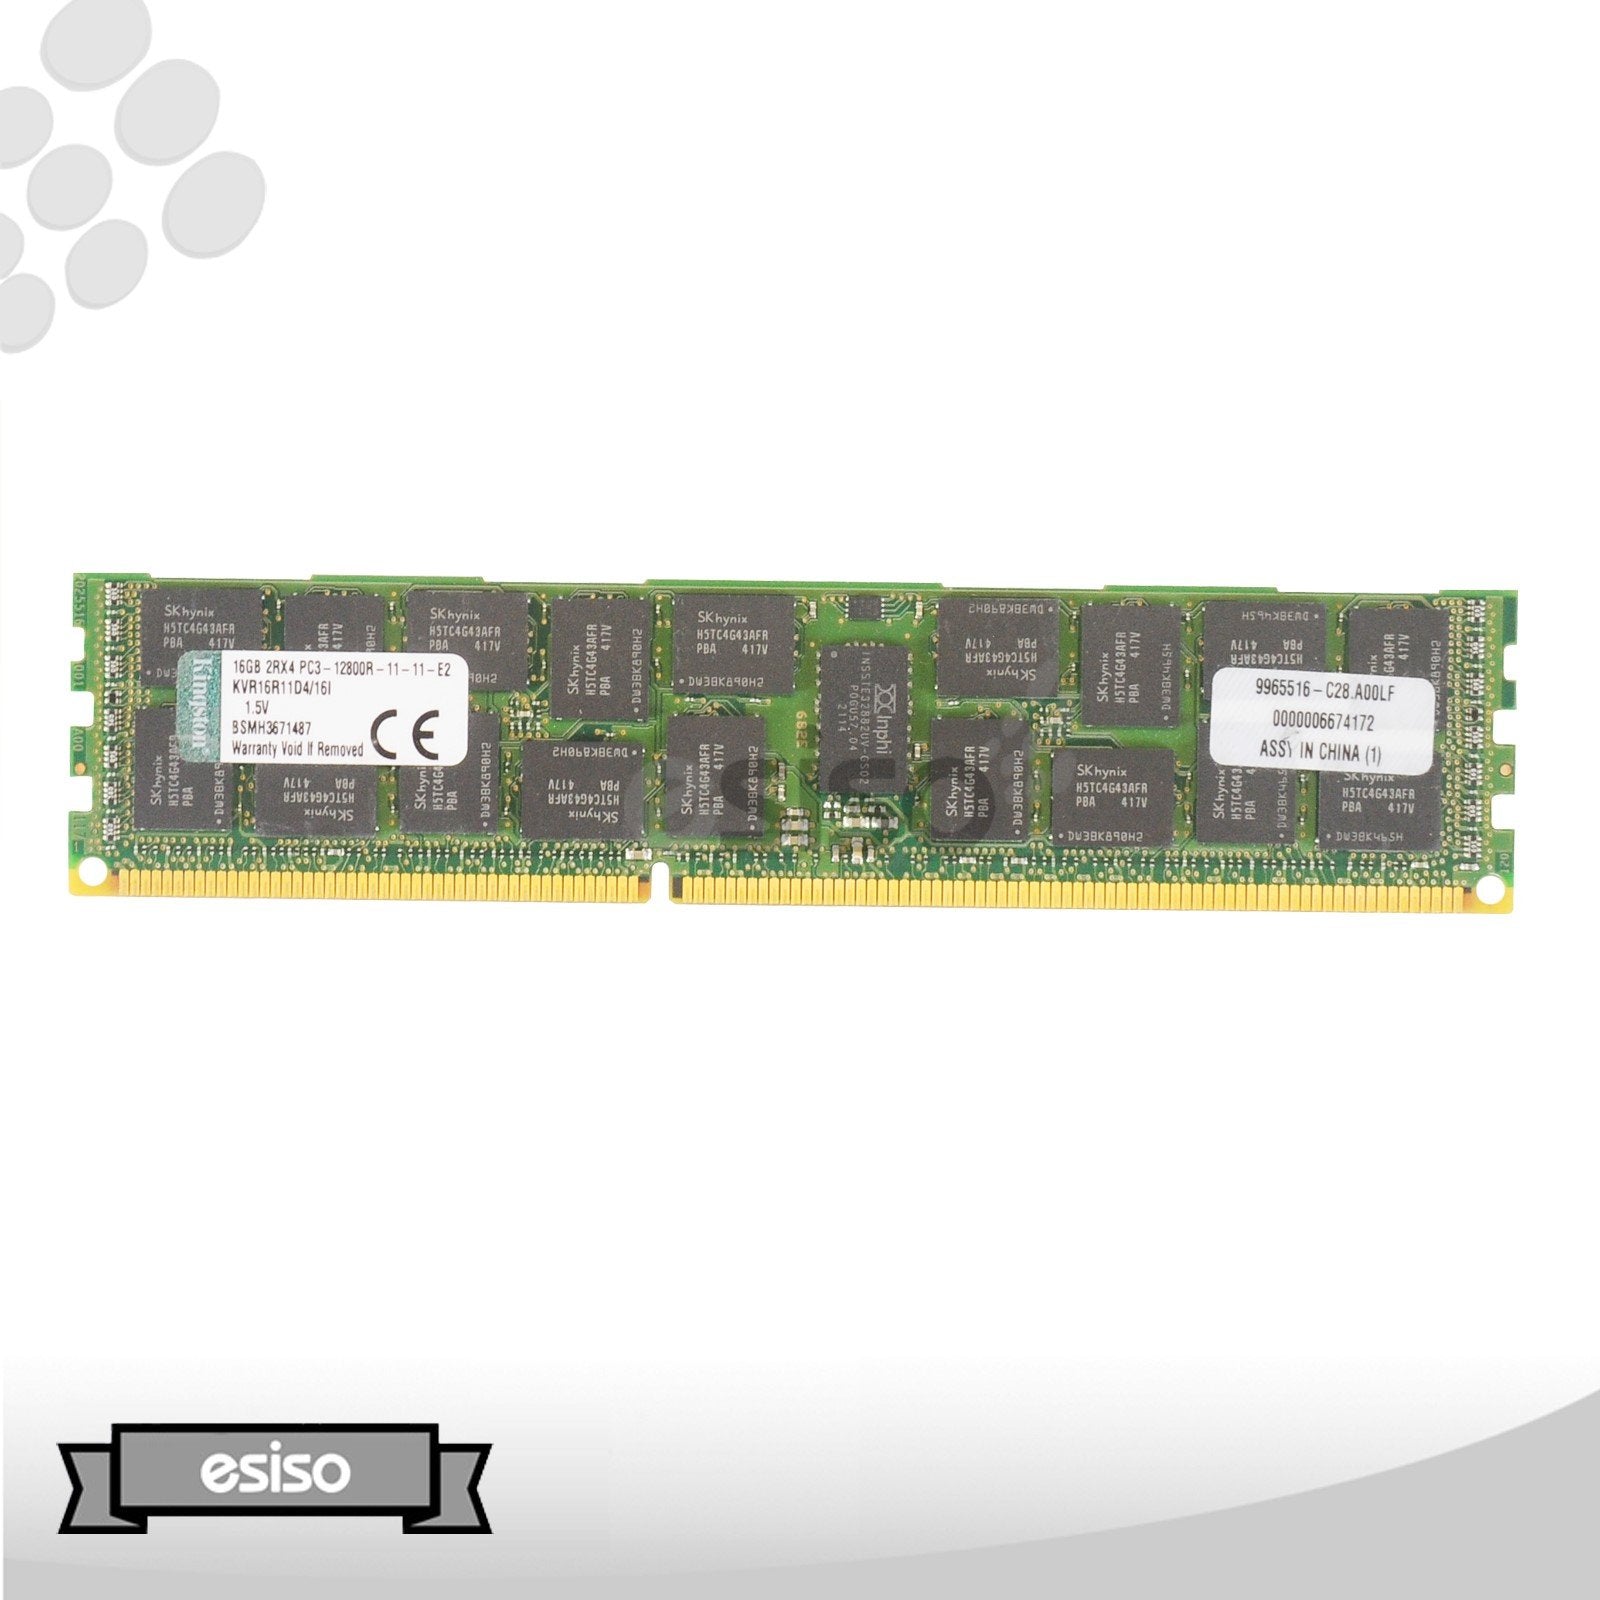 KVR16R11D4/16I KINGSTON 16GB 2RX4 PC3-12800R DDR3 MEMORY MODULE (1x16GB)